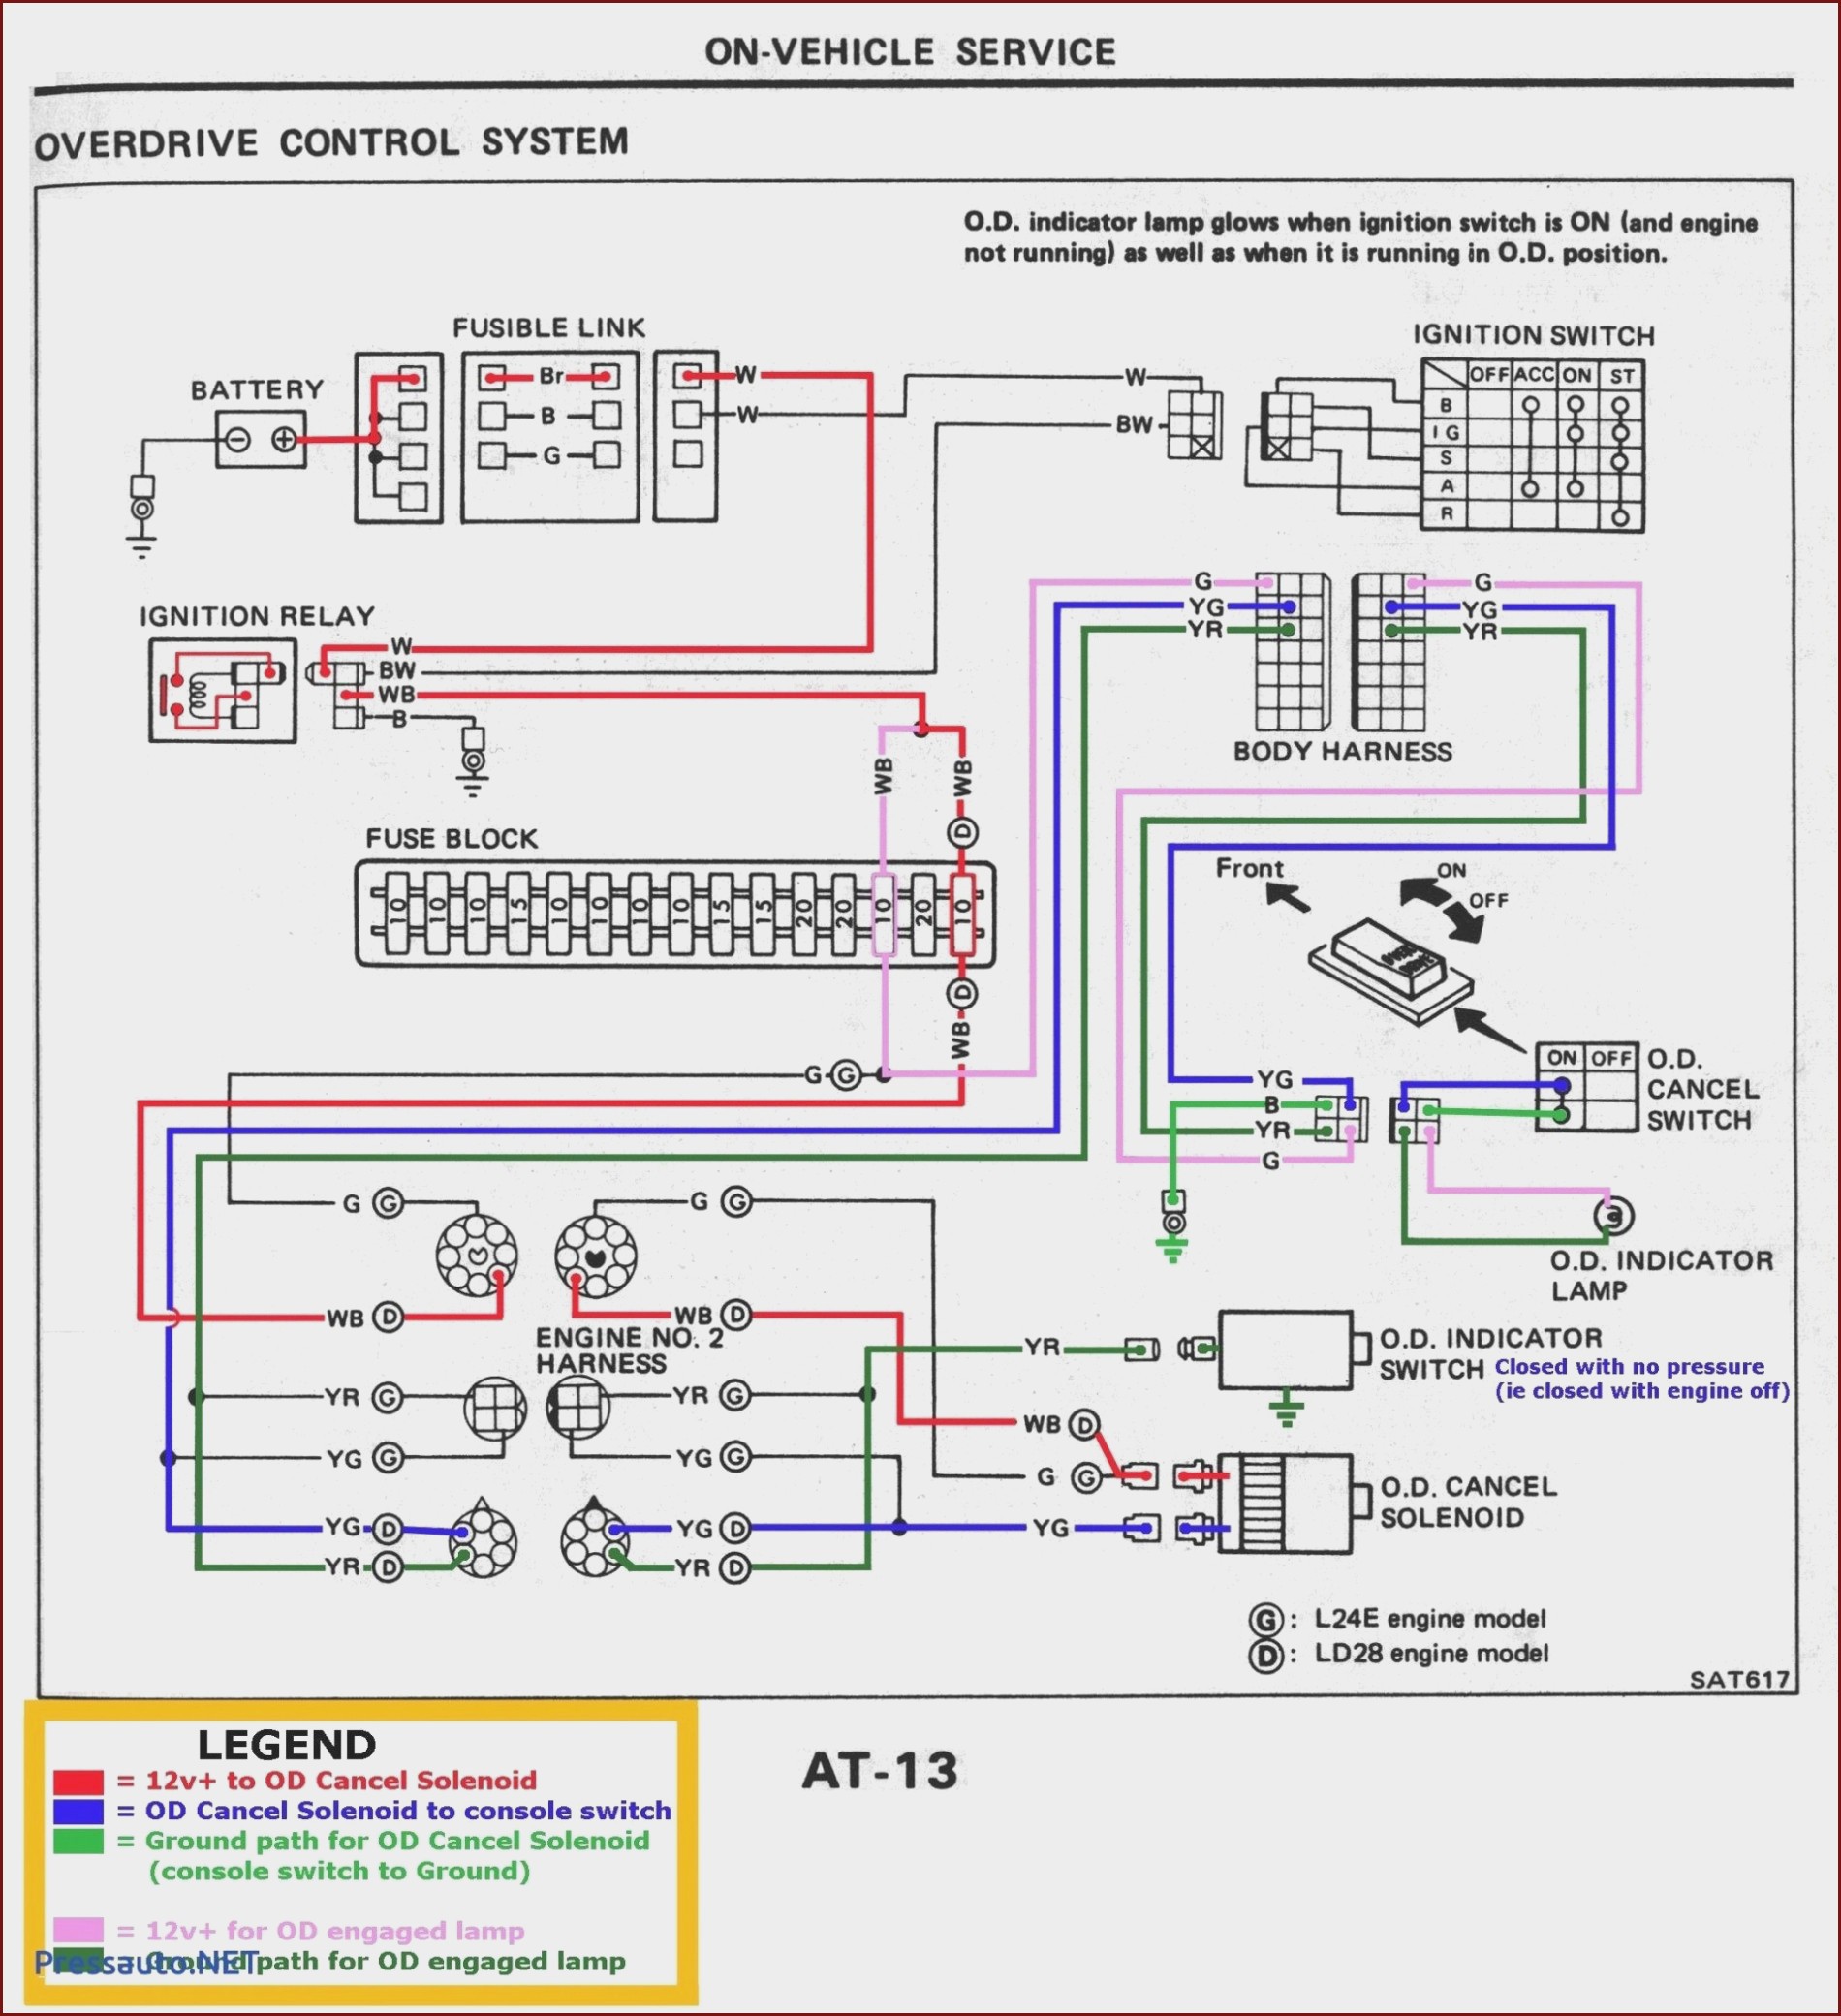 1999 ford F150 Engine Diagram ford F 150 Wiring Harness Diagram Wiring Diagram Options Of 1999 ford F150 Engine Diagram